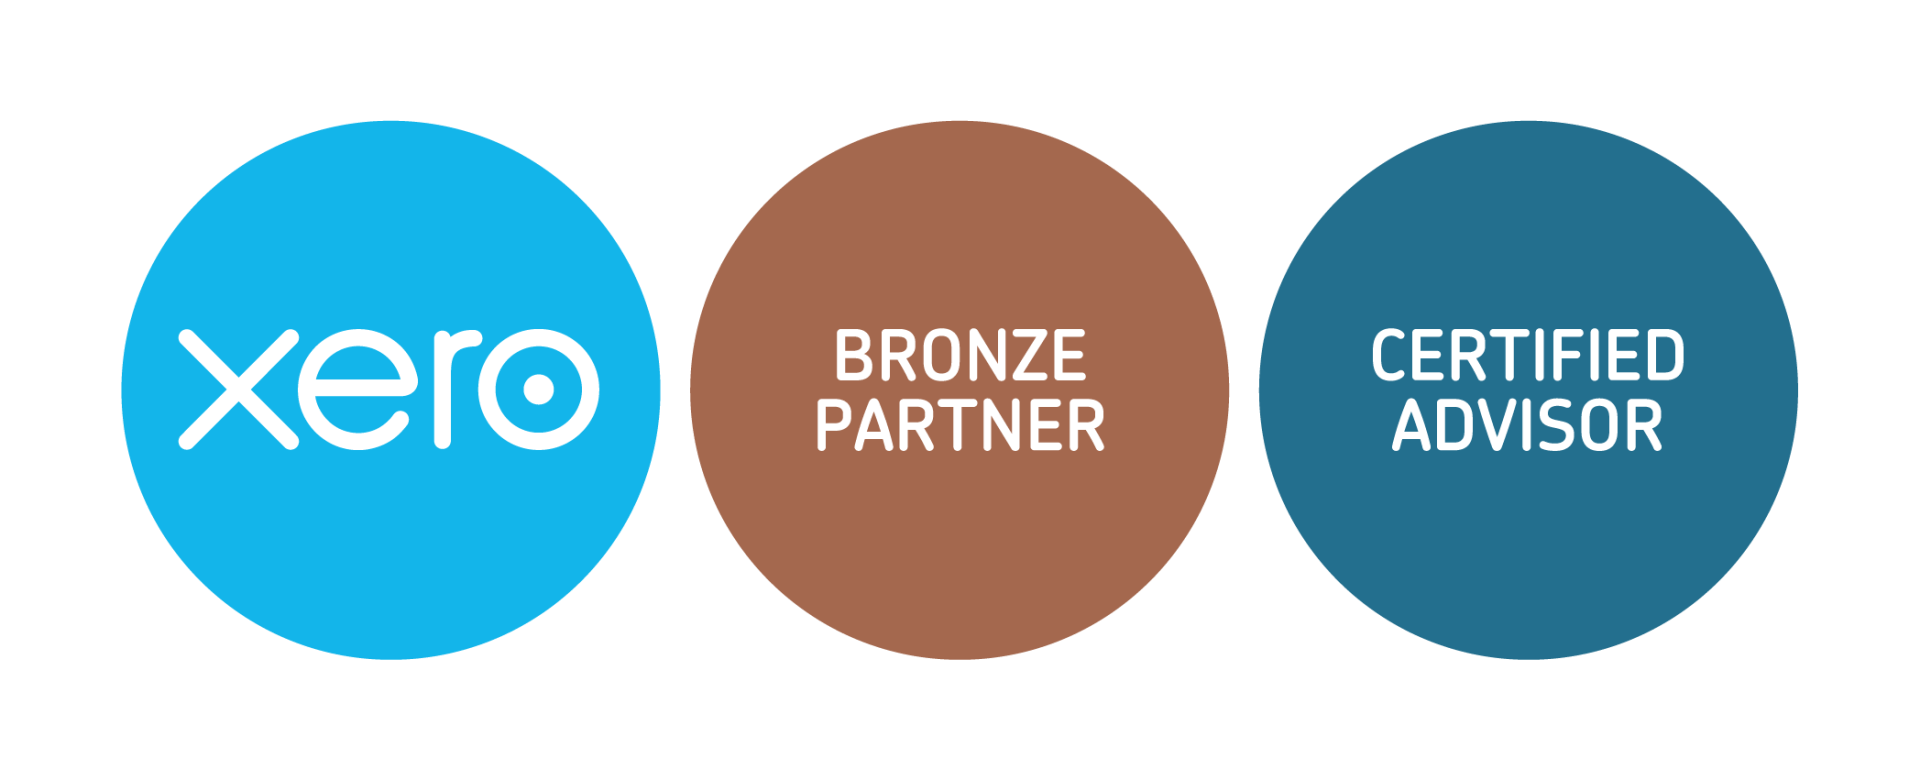 Xero Bronze Partner badge